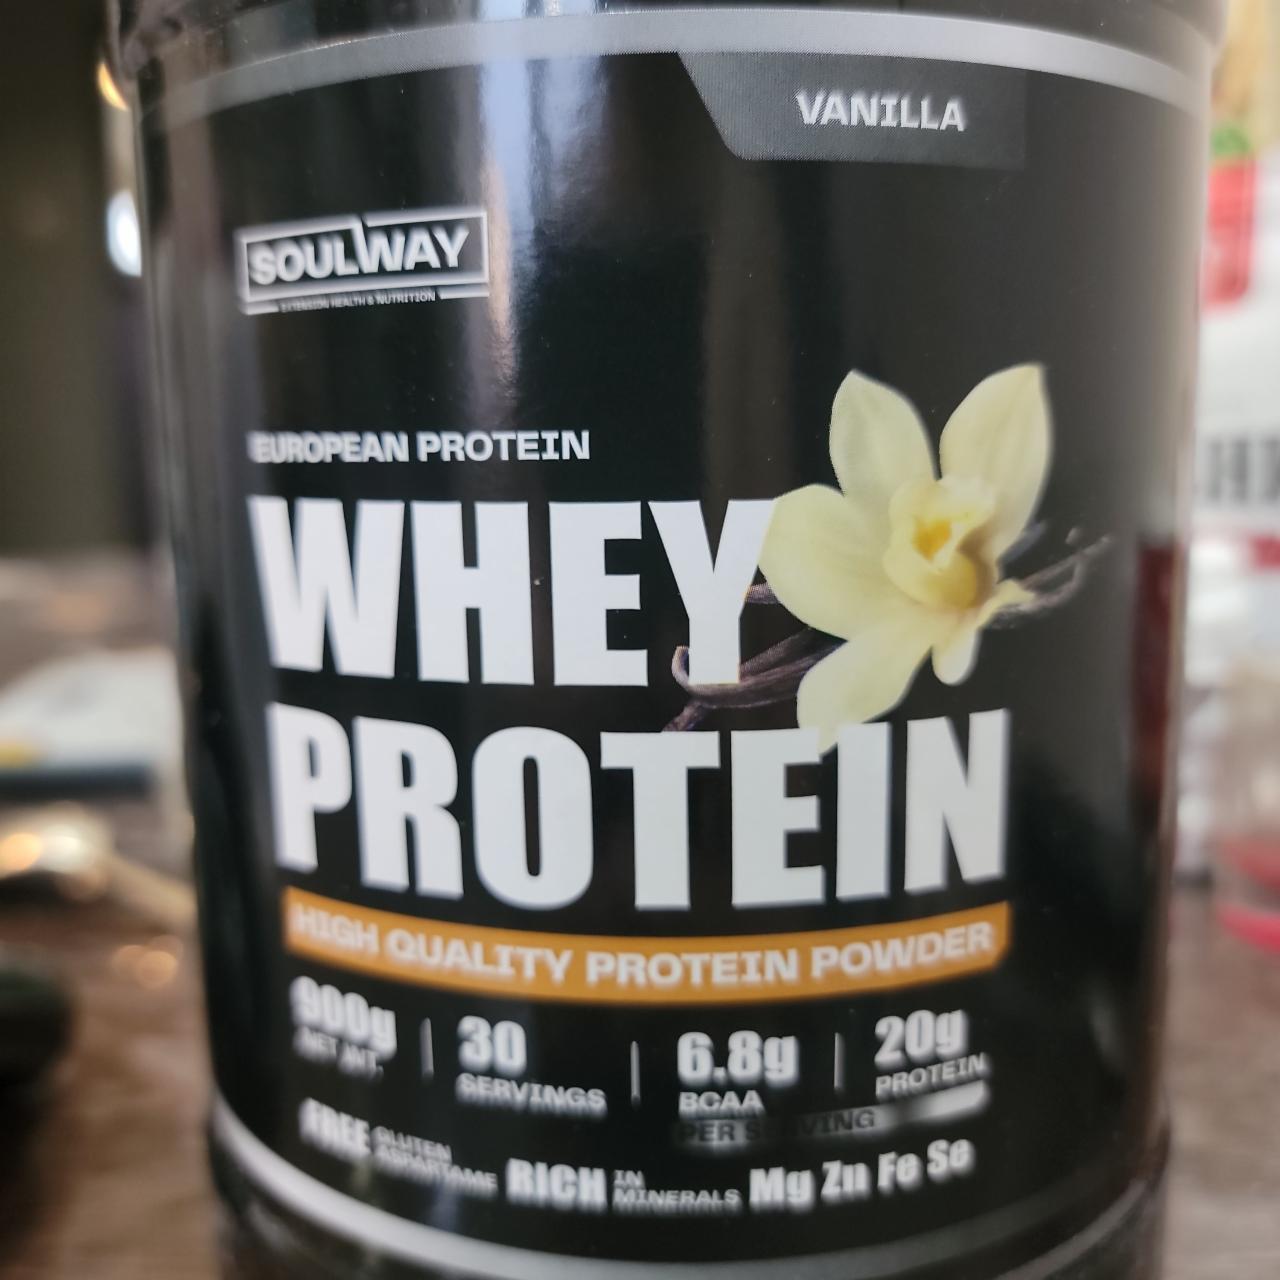 Фото - Whey Protein Vanilla European Protein Soulway